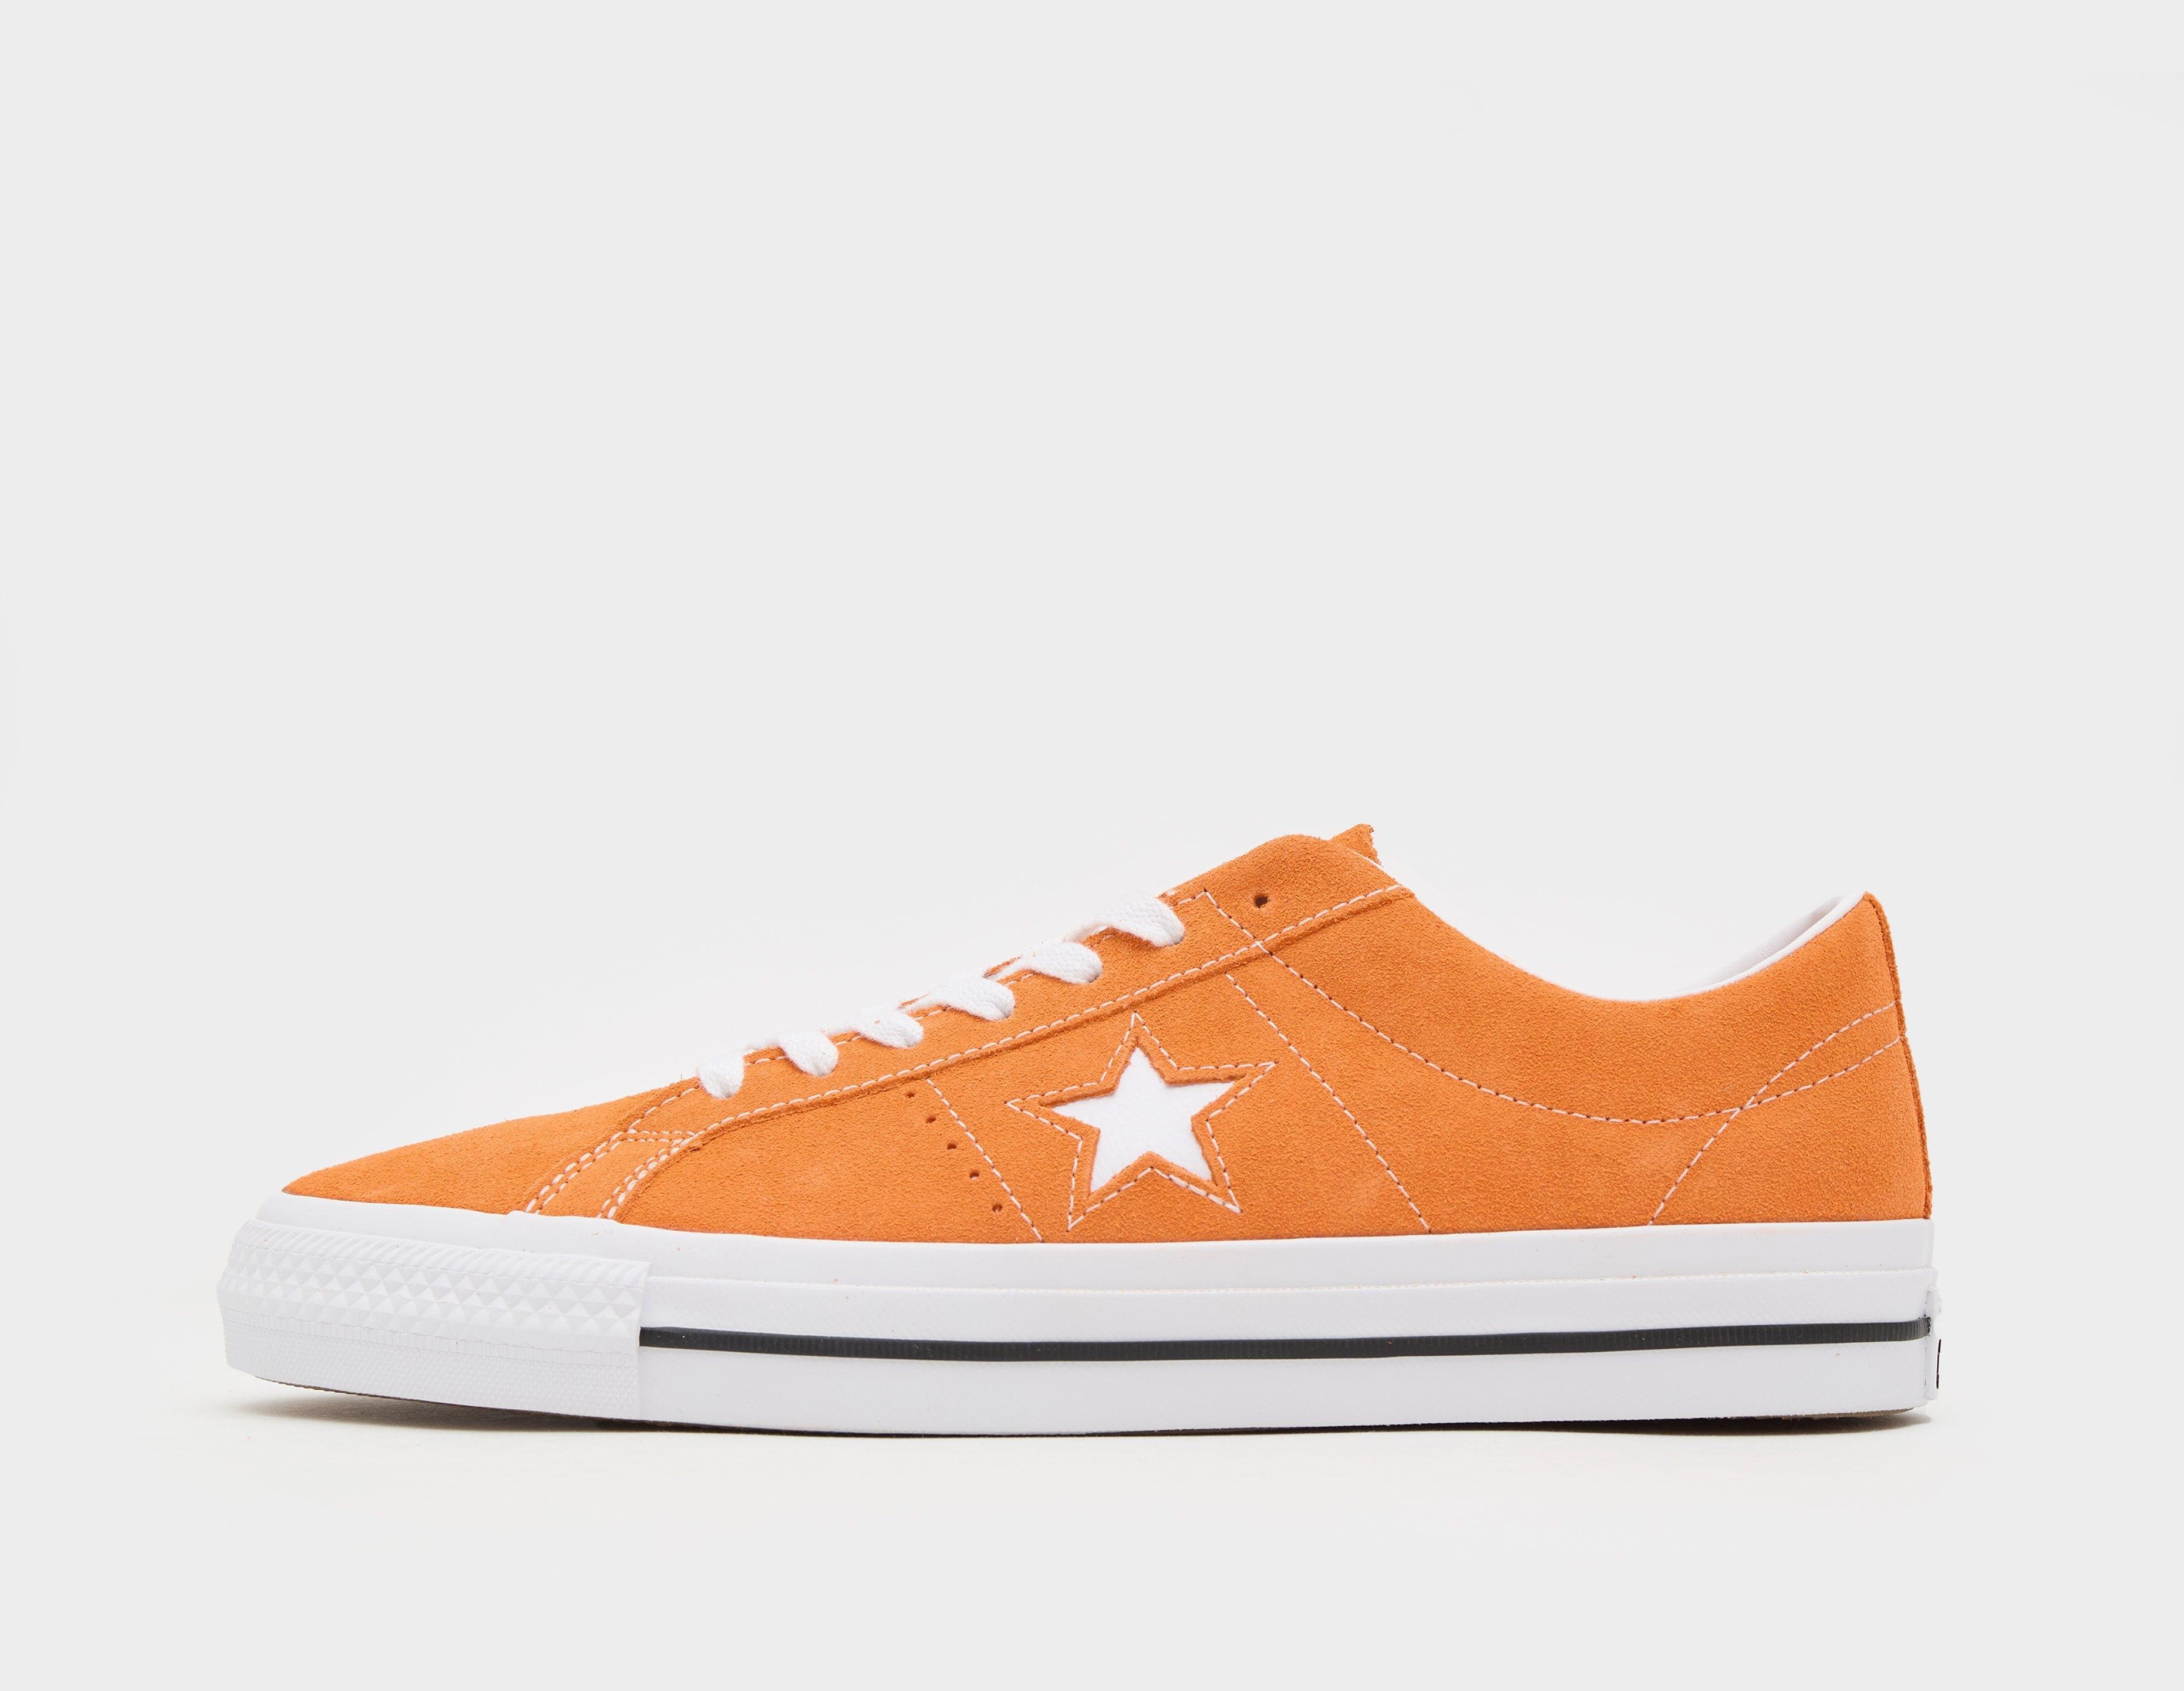 converse one star pro, orange